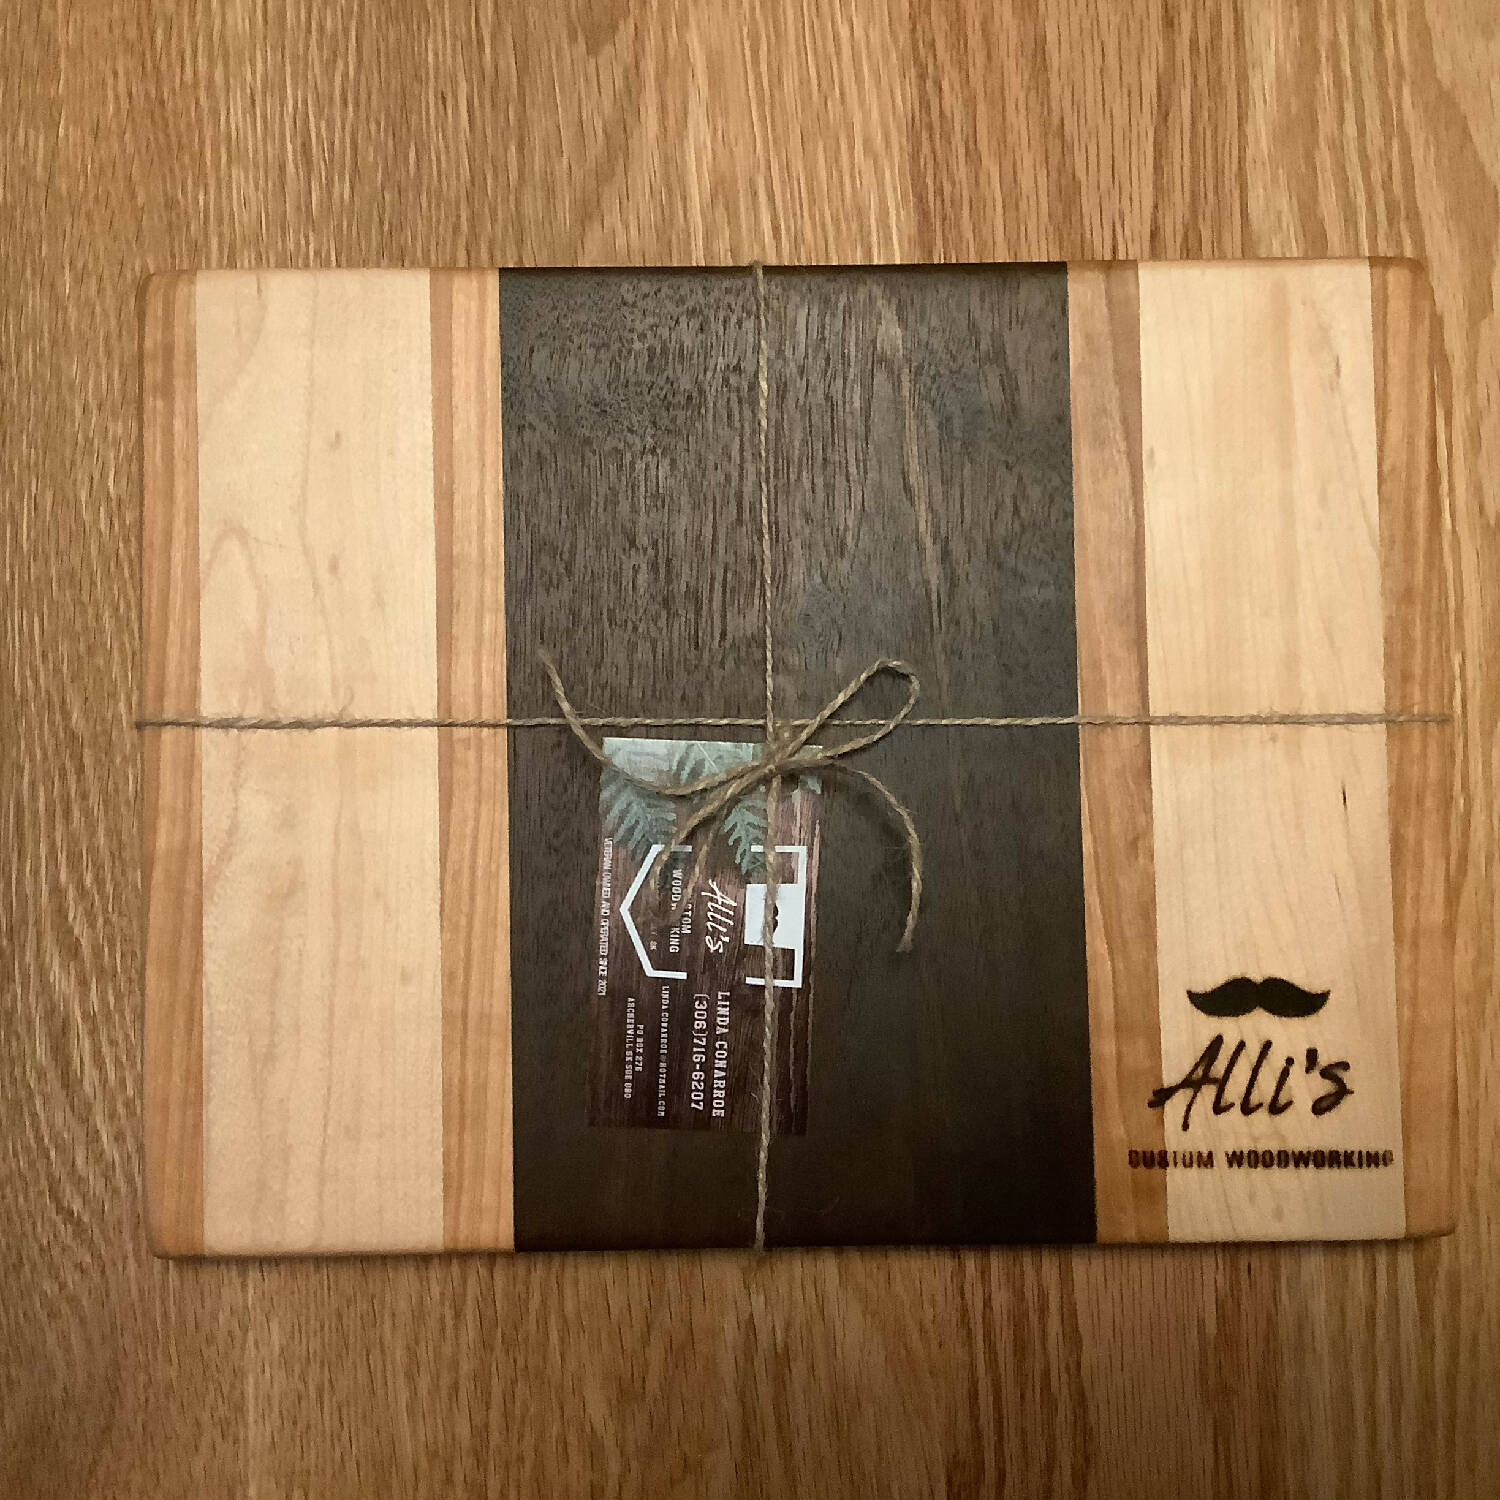 9” x 12” cutting board